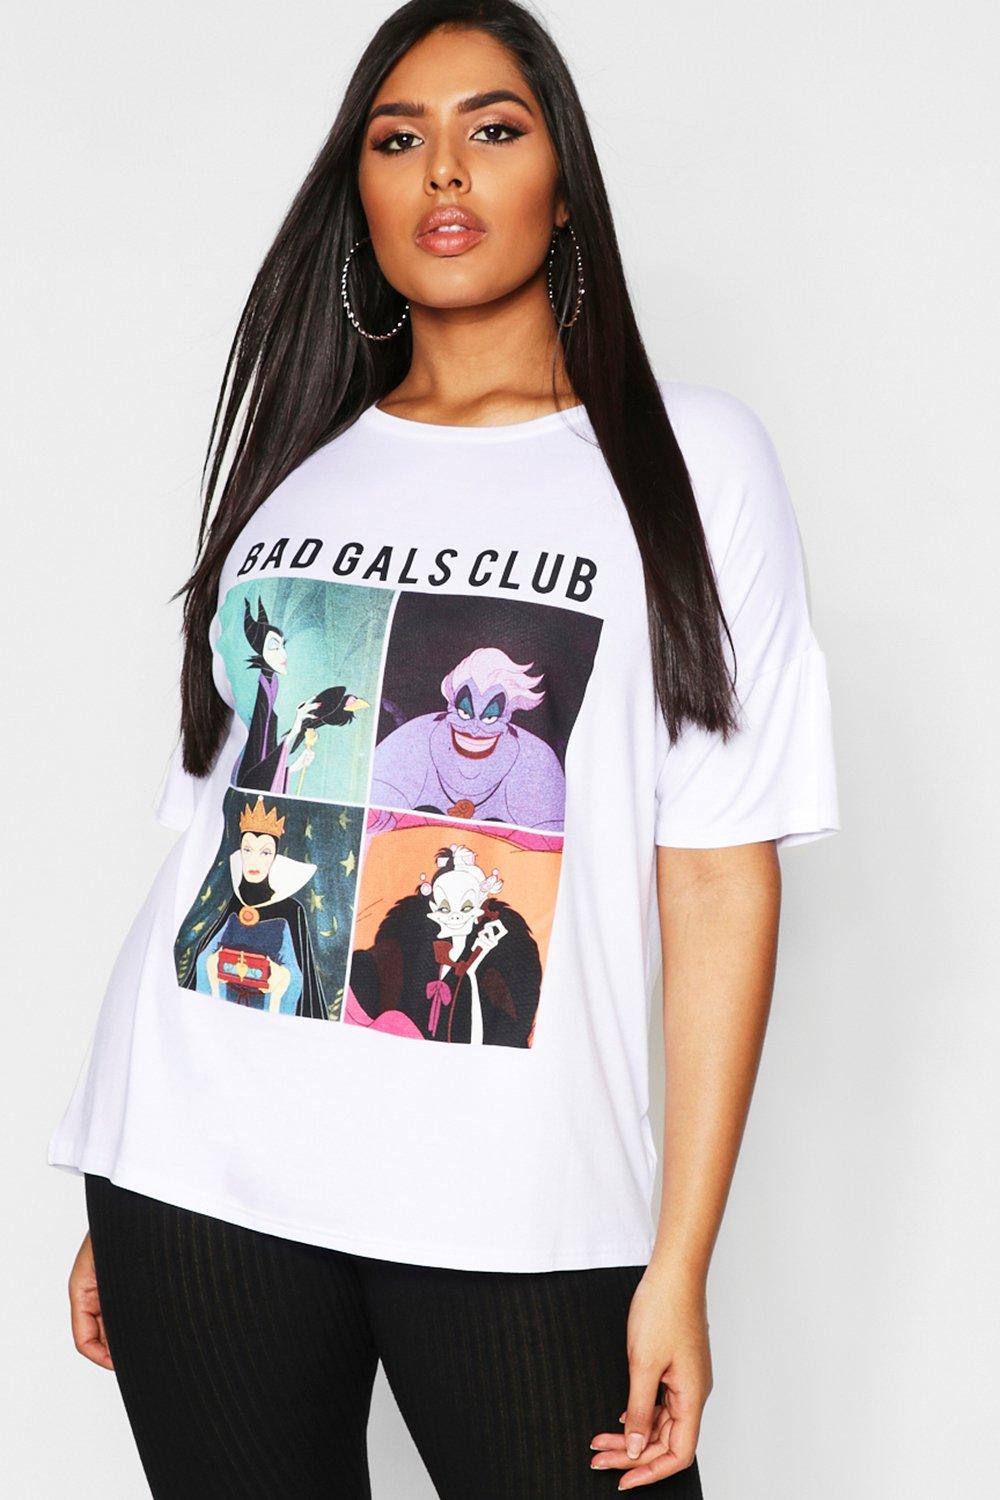 Bad Girls Club T Shirt Fashion Summer UK Casual Short Sleeve Brand New Tee Top